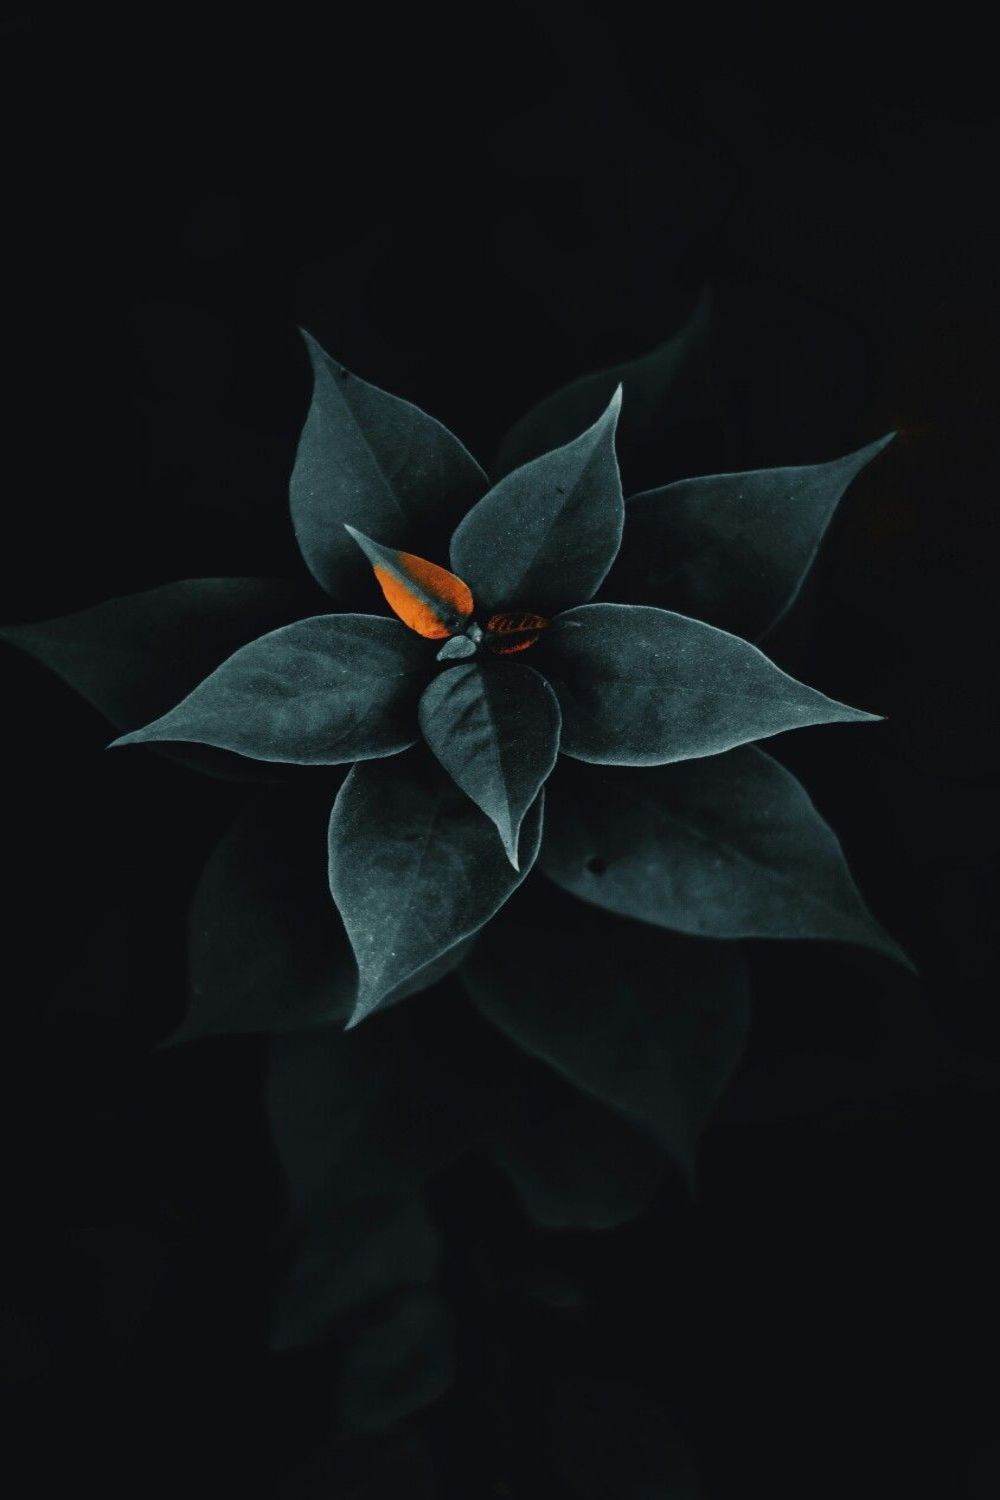 Best Black wallpaper HD 4k Free Downloads. Flowers black background, Leaves wallpaper iphone, Black background photography